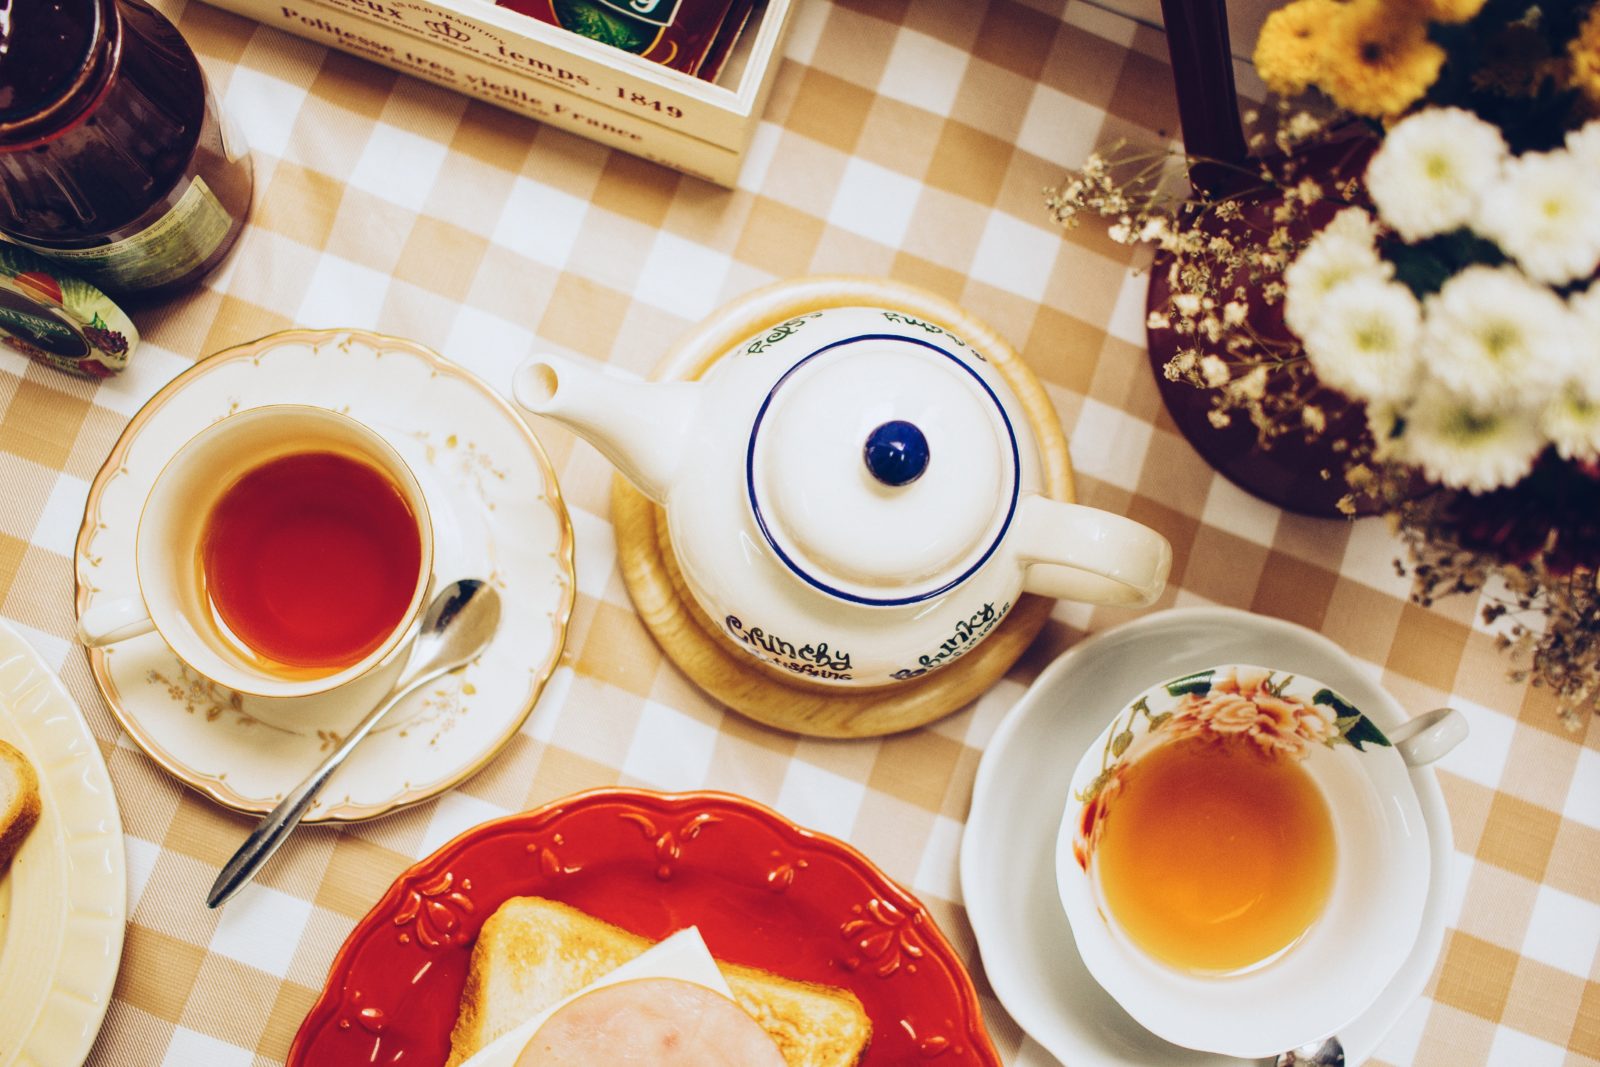 Black teas anchor high tea in the United Kingdom